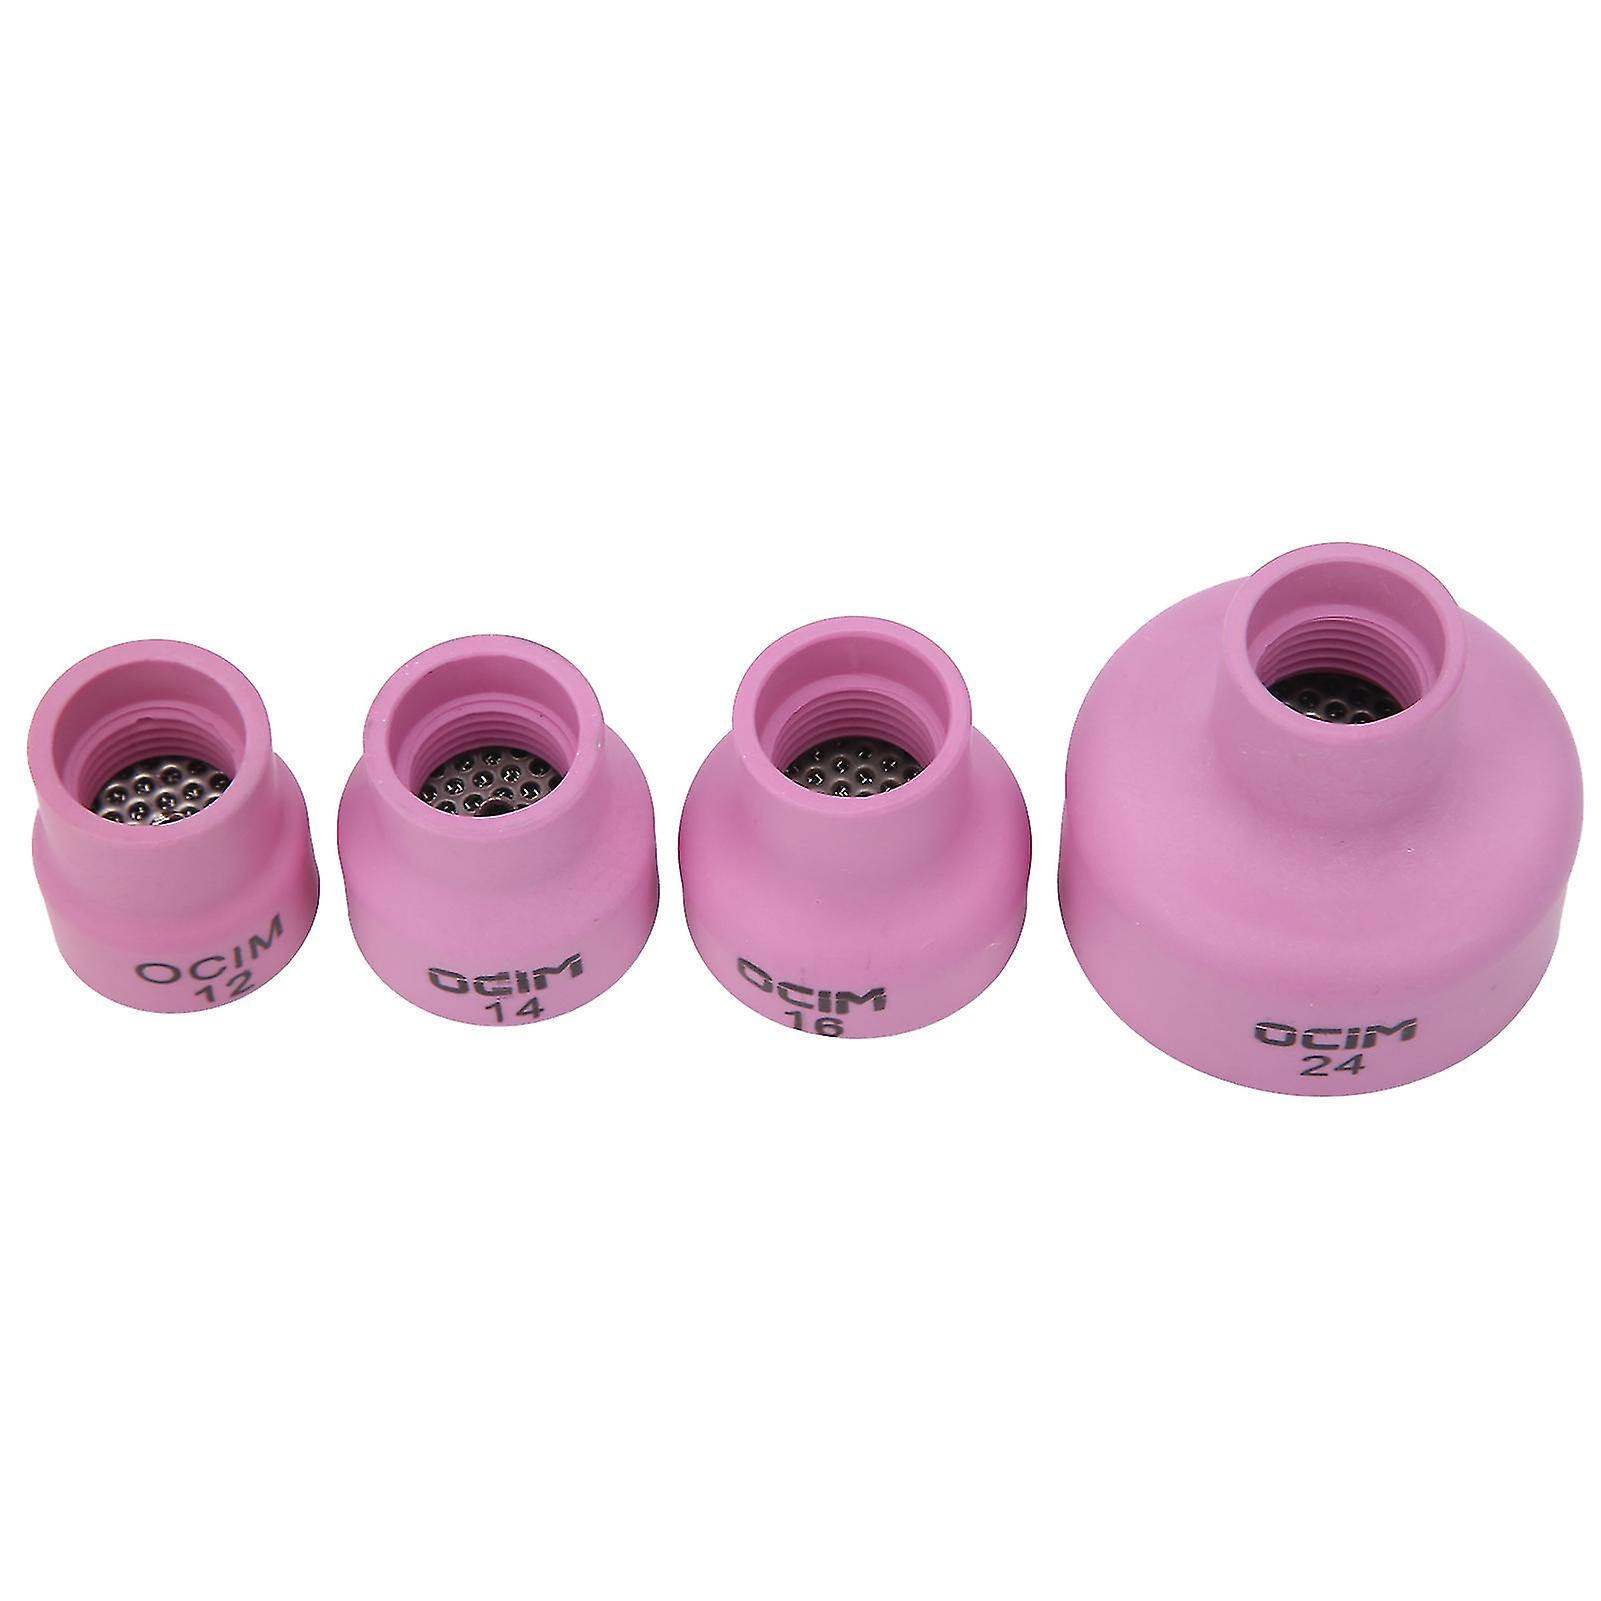 Ceramic Welding Cup Set Alumina Torch Gas Lens Kit Industrial Supplies WP‑17/18/26 1.6